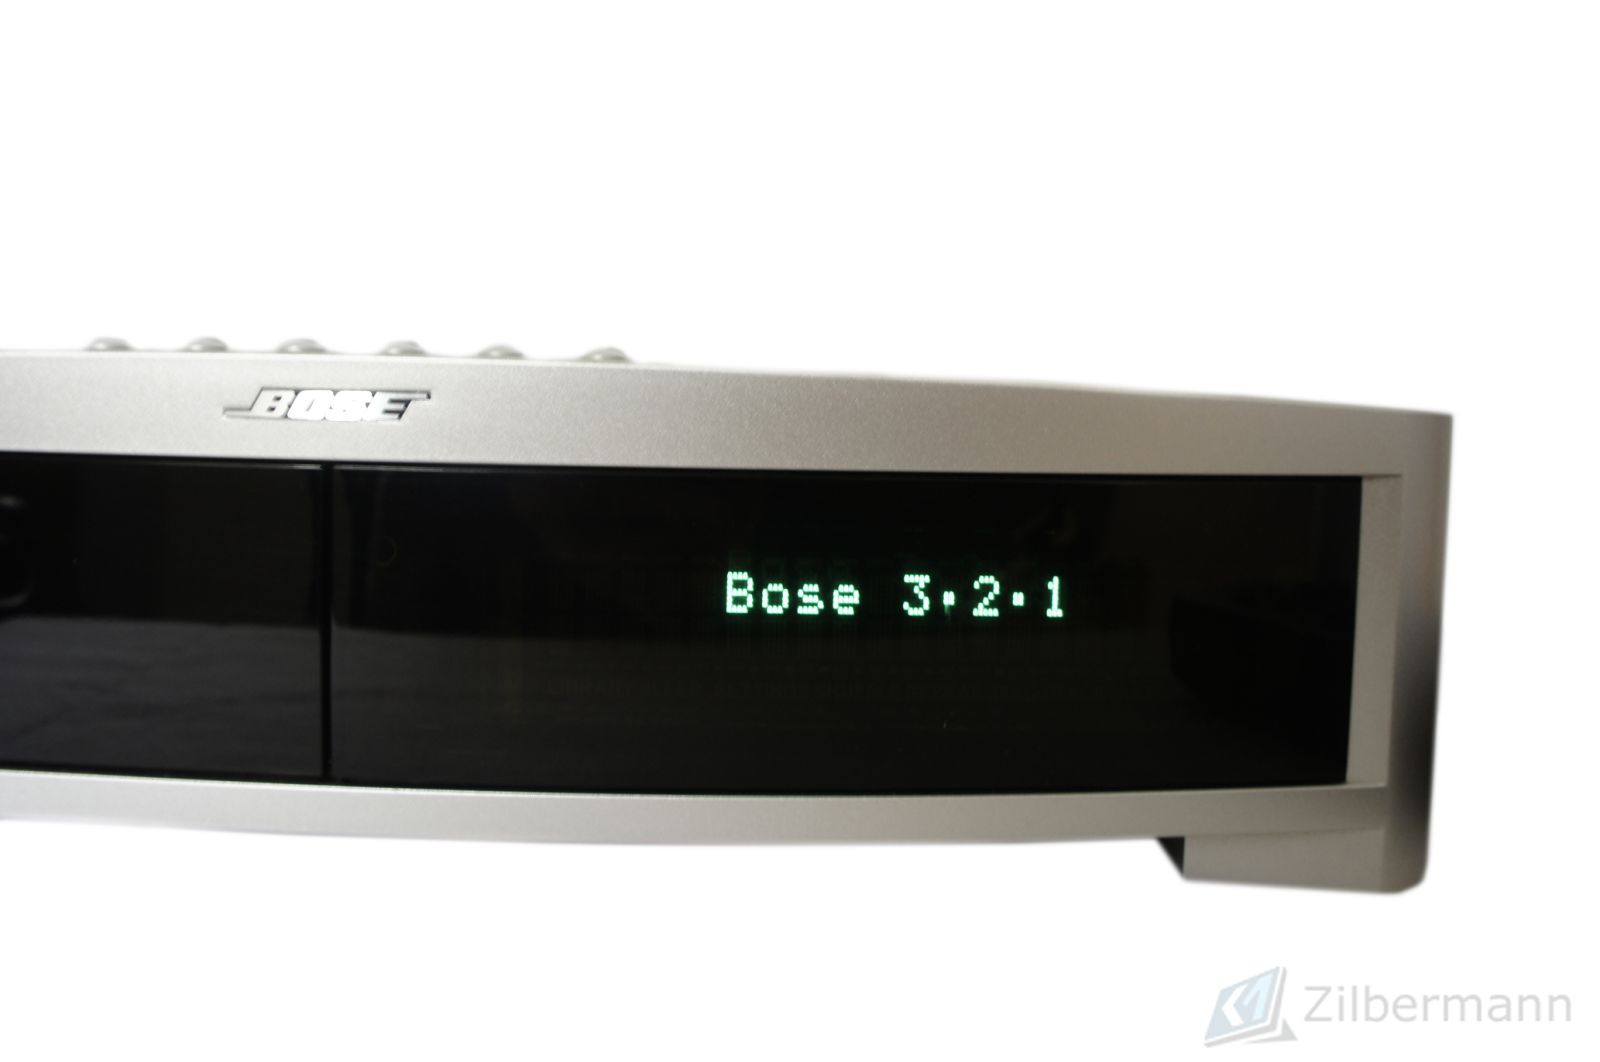 Bose_321_3-2-1_GS_Series_III_Heimkino-system_mit_HDMI